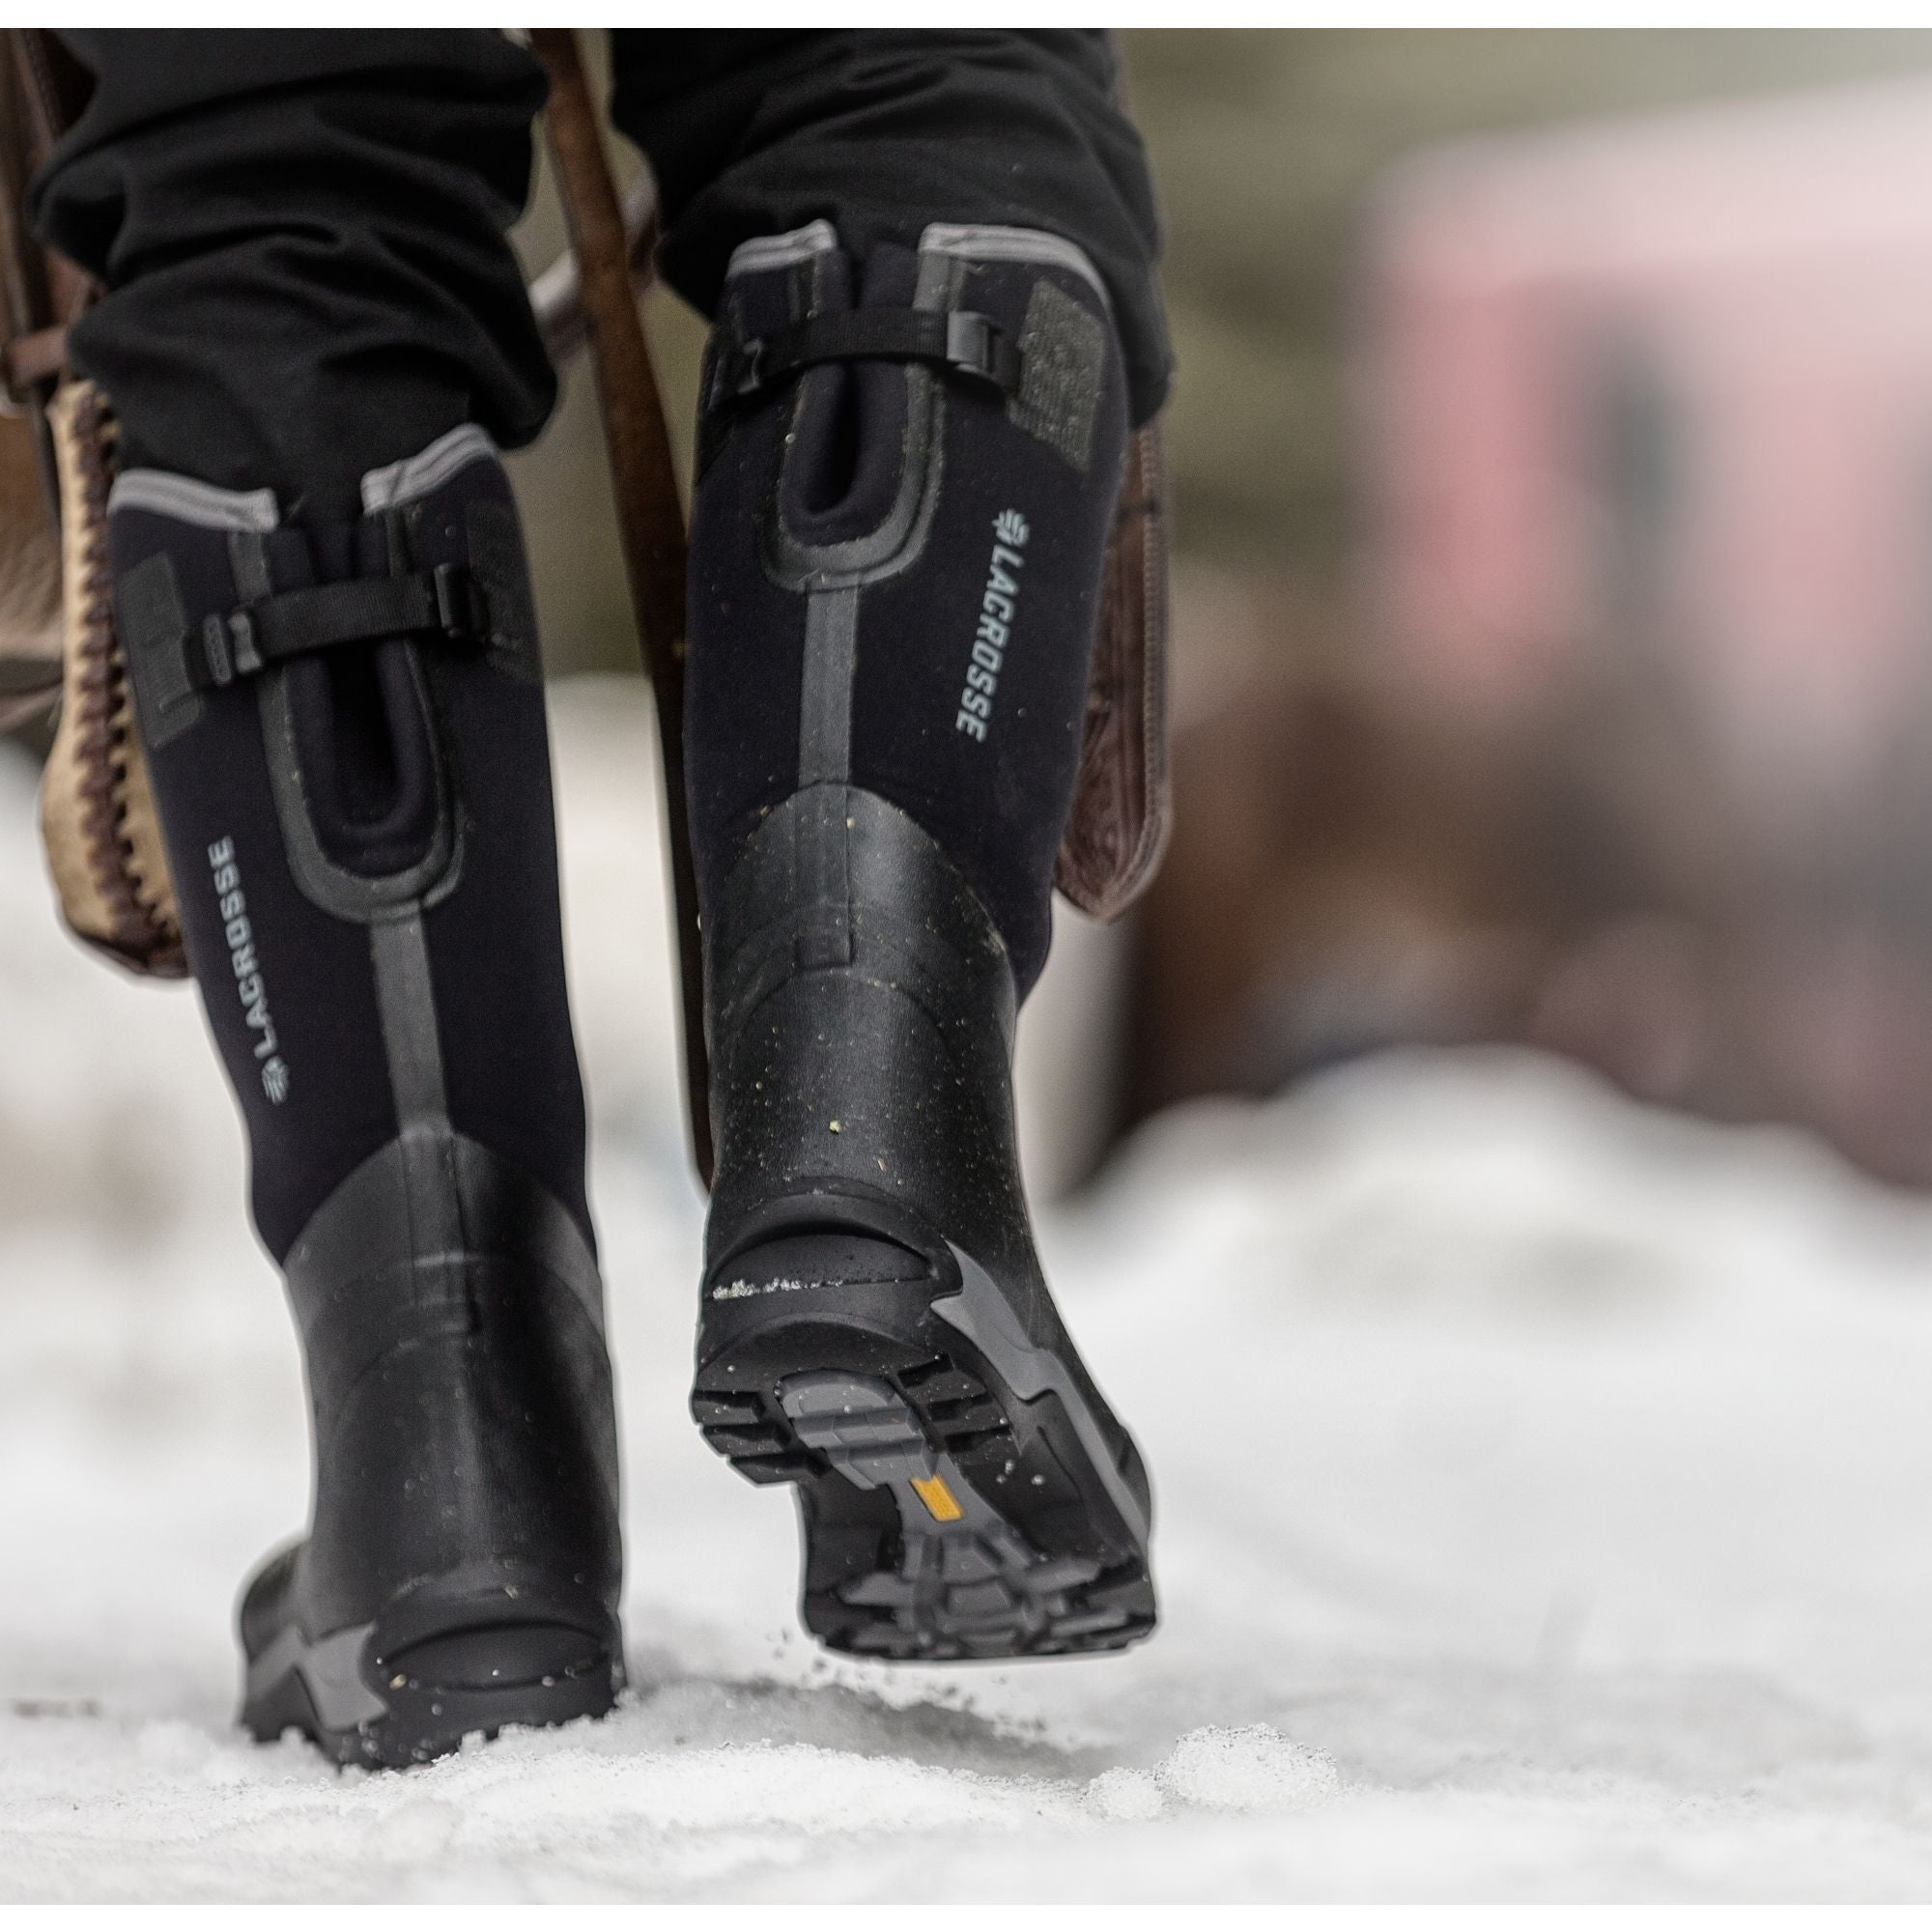 LaCrosse Men's Alpha Thermal 16" CT Ins Rubber Work Boot Black 644103  - Overlook Boots